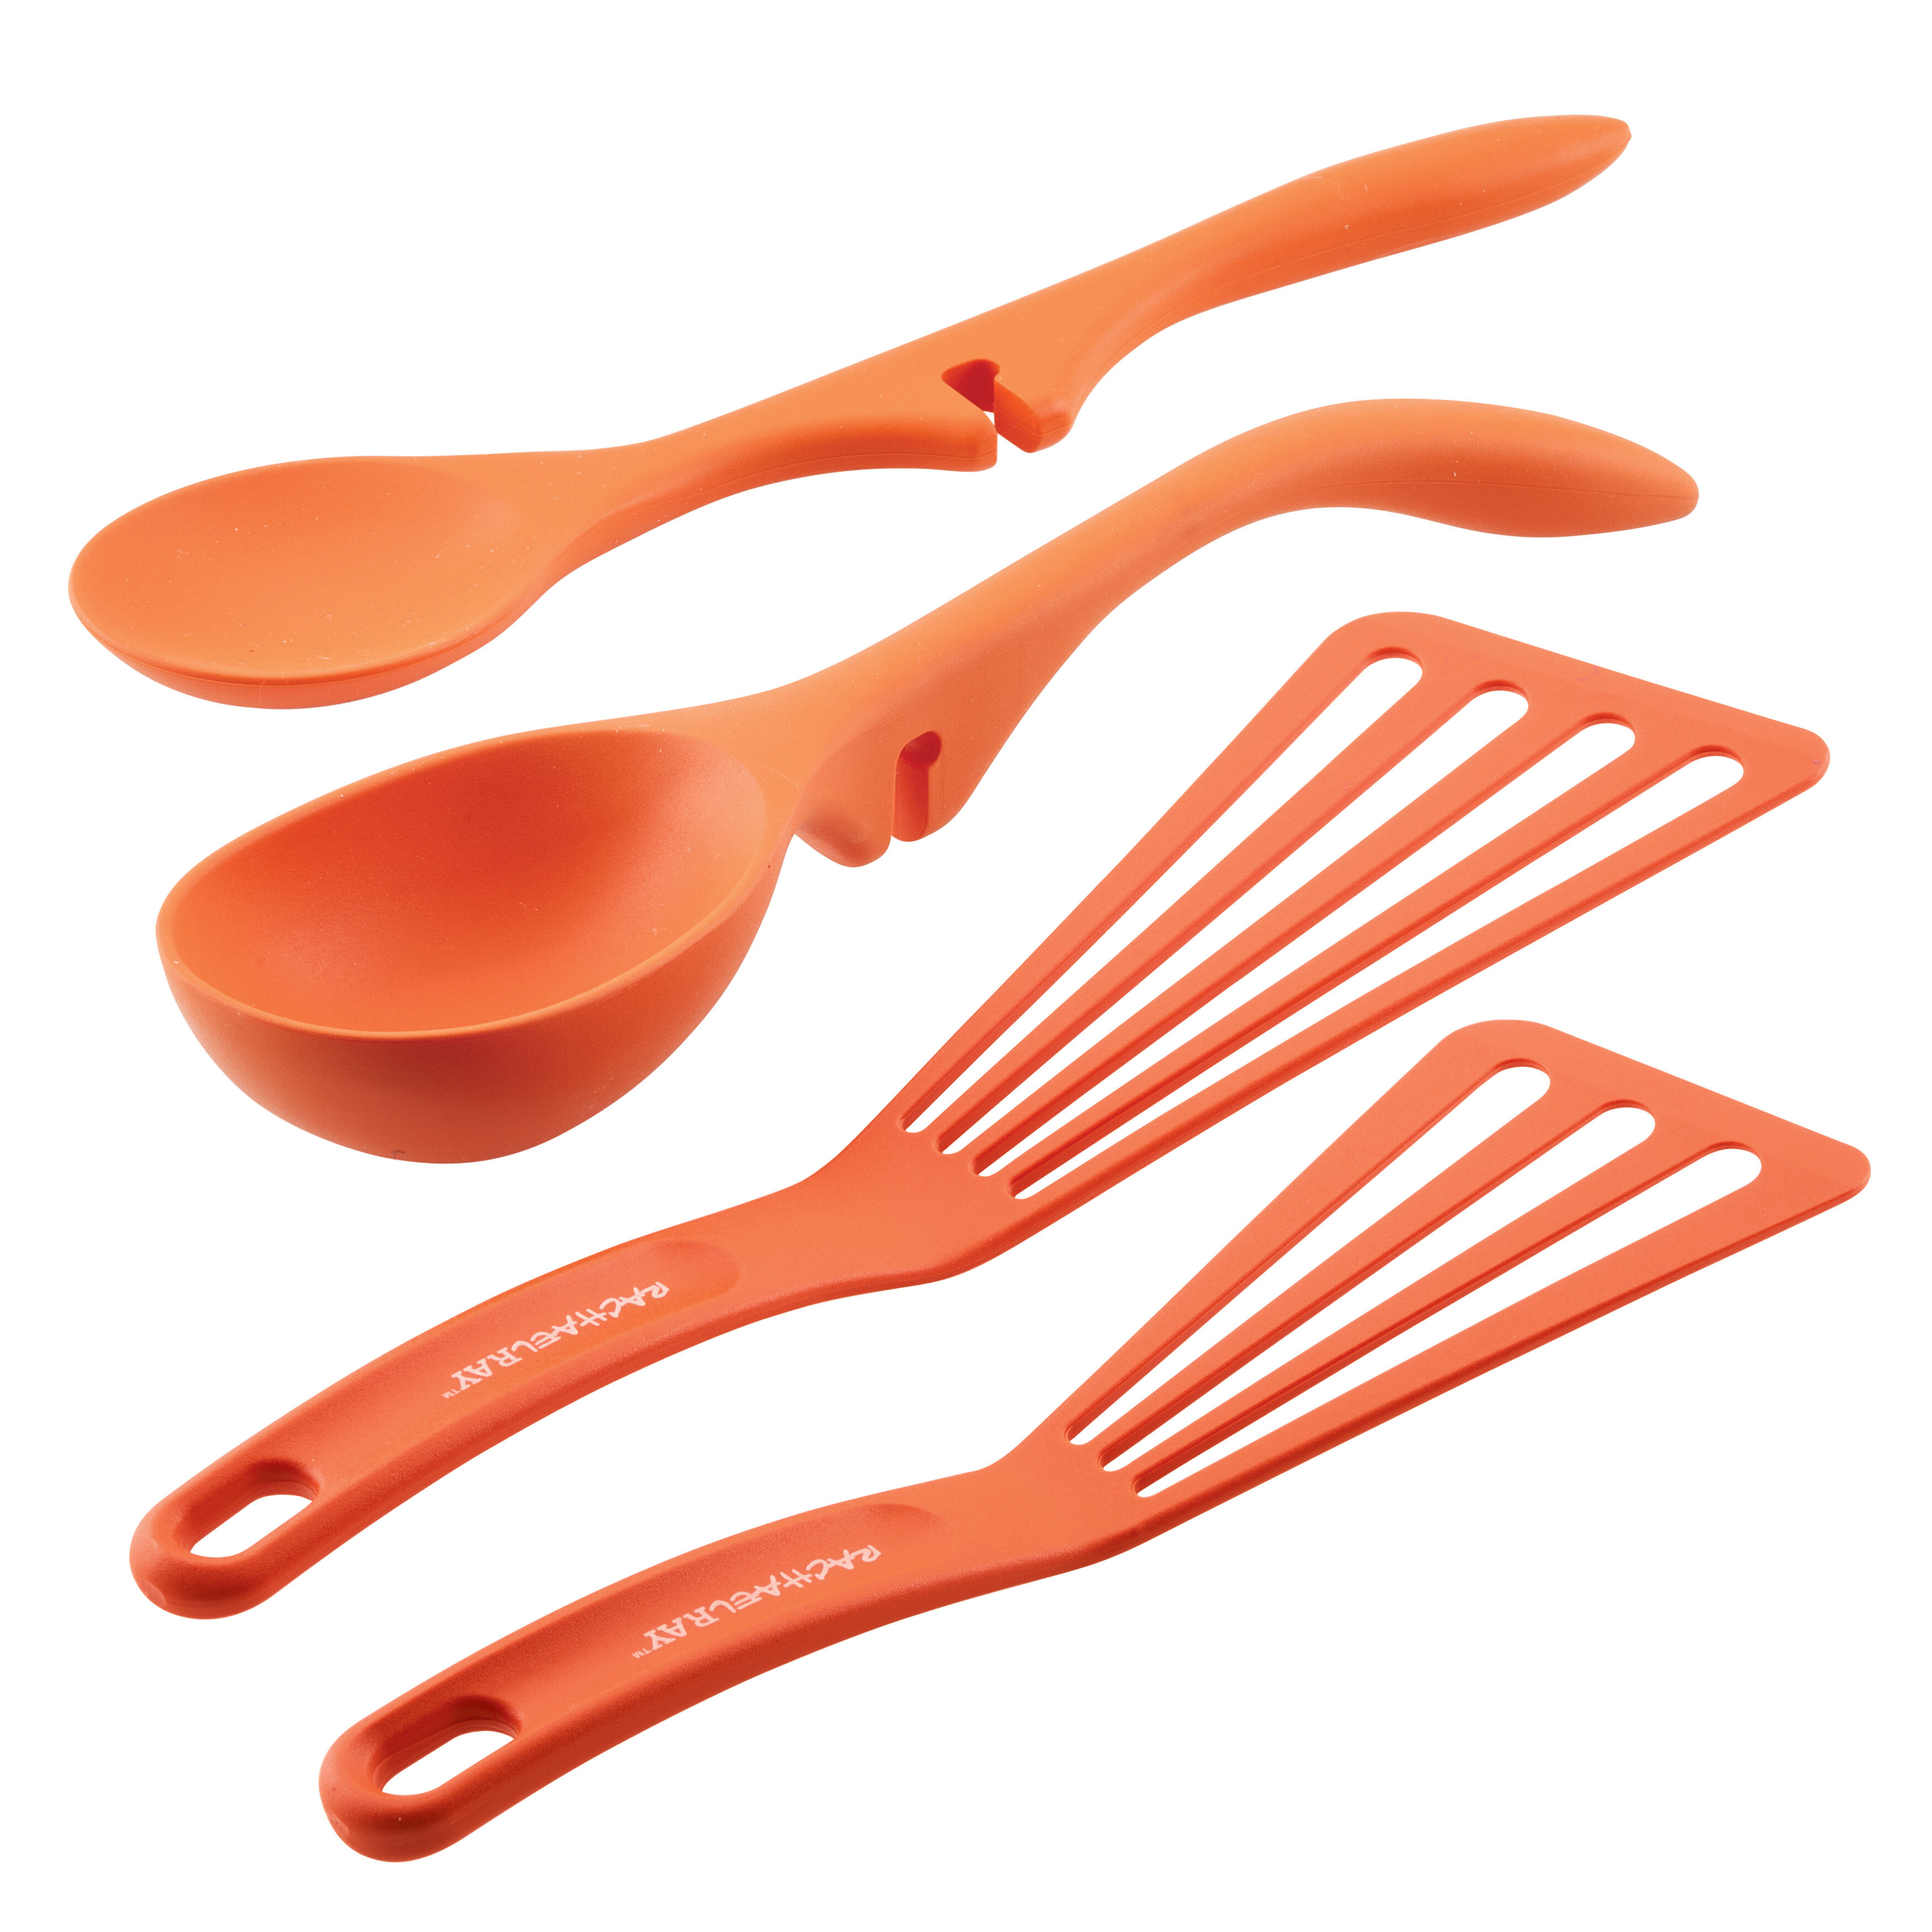 6 Pieces Small Multicolored Silicone Spoons Nonstick Kitchen Spoon